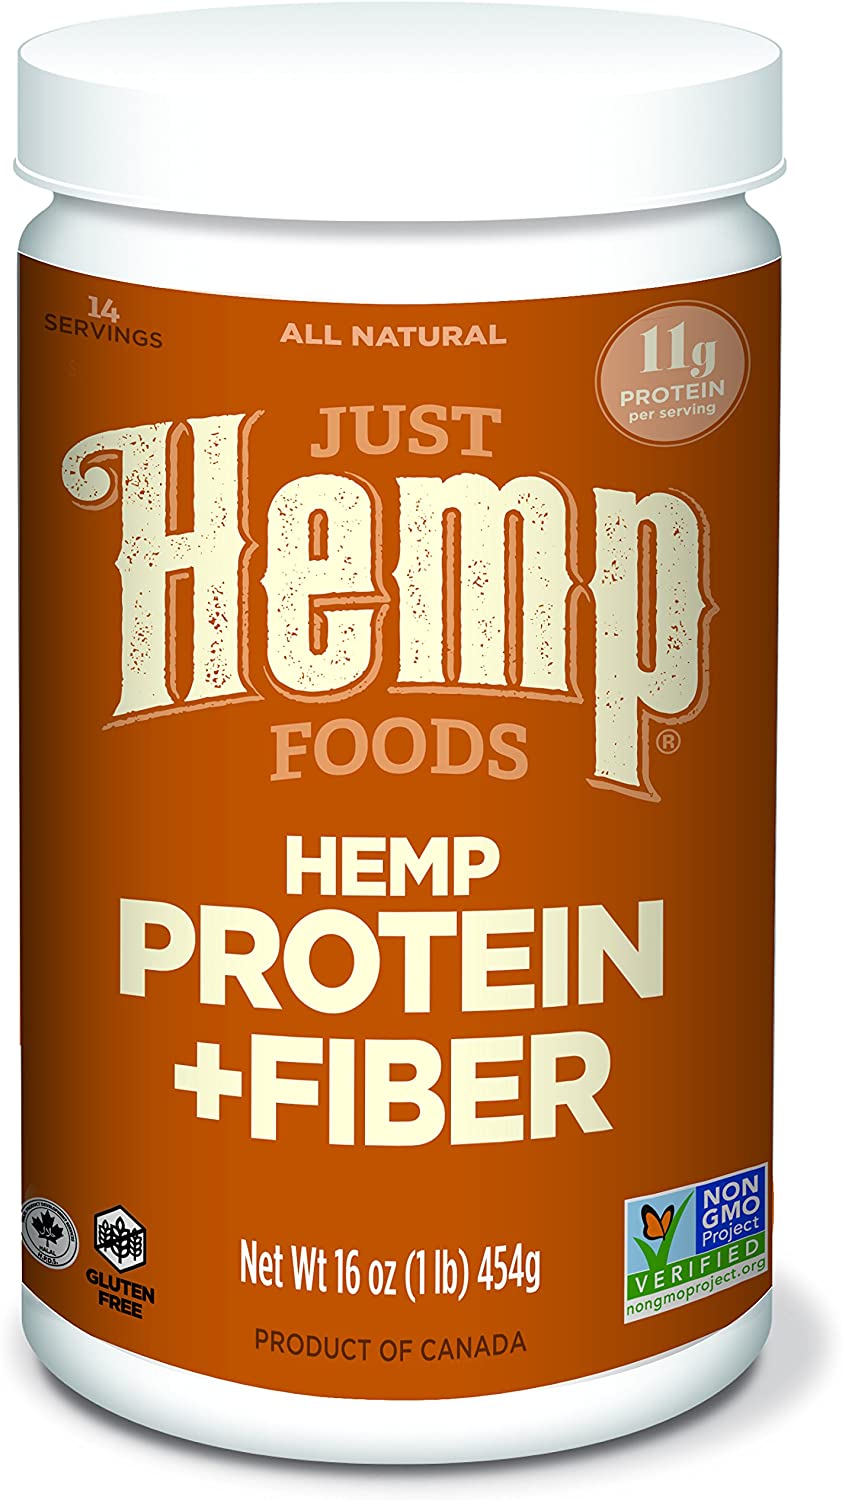 Just Hemp Foods Hemp Protein Powder Plus Fiber $6.98